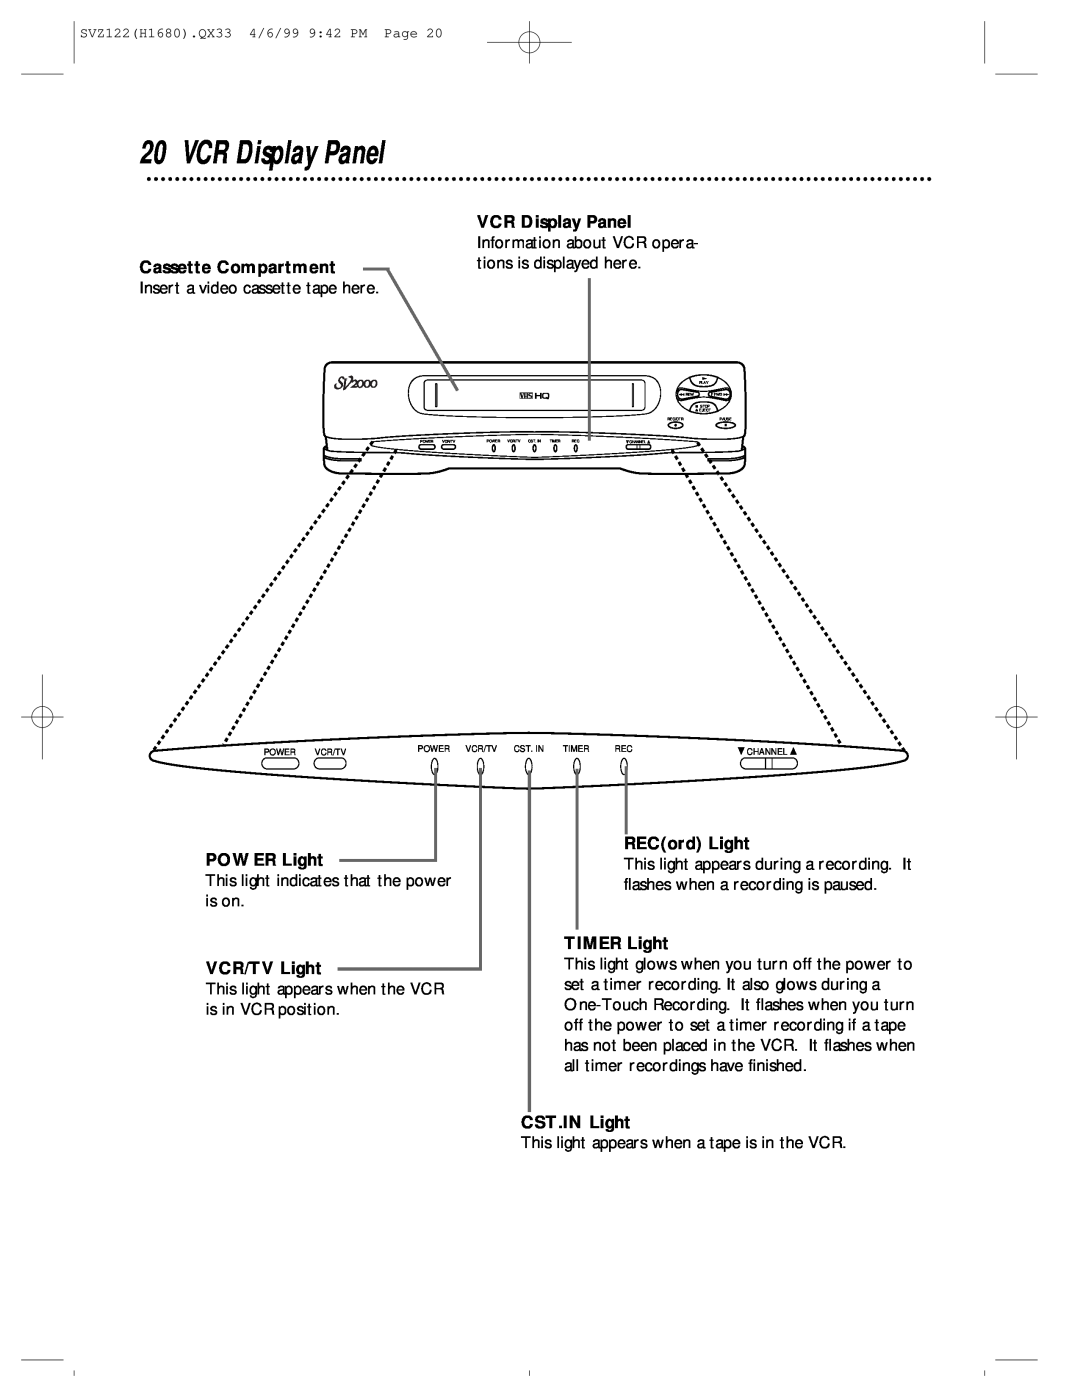 Philips SVZ122 VCR Display Panel, Cassette Compartment, POWER Light, VCR/TV Light, RECord Light, TIMER Light, CST.IN Light 